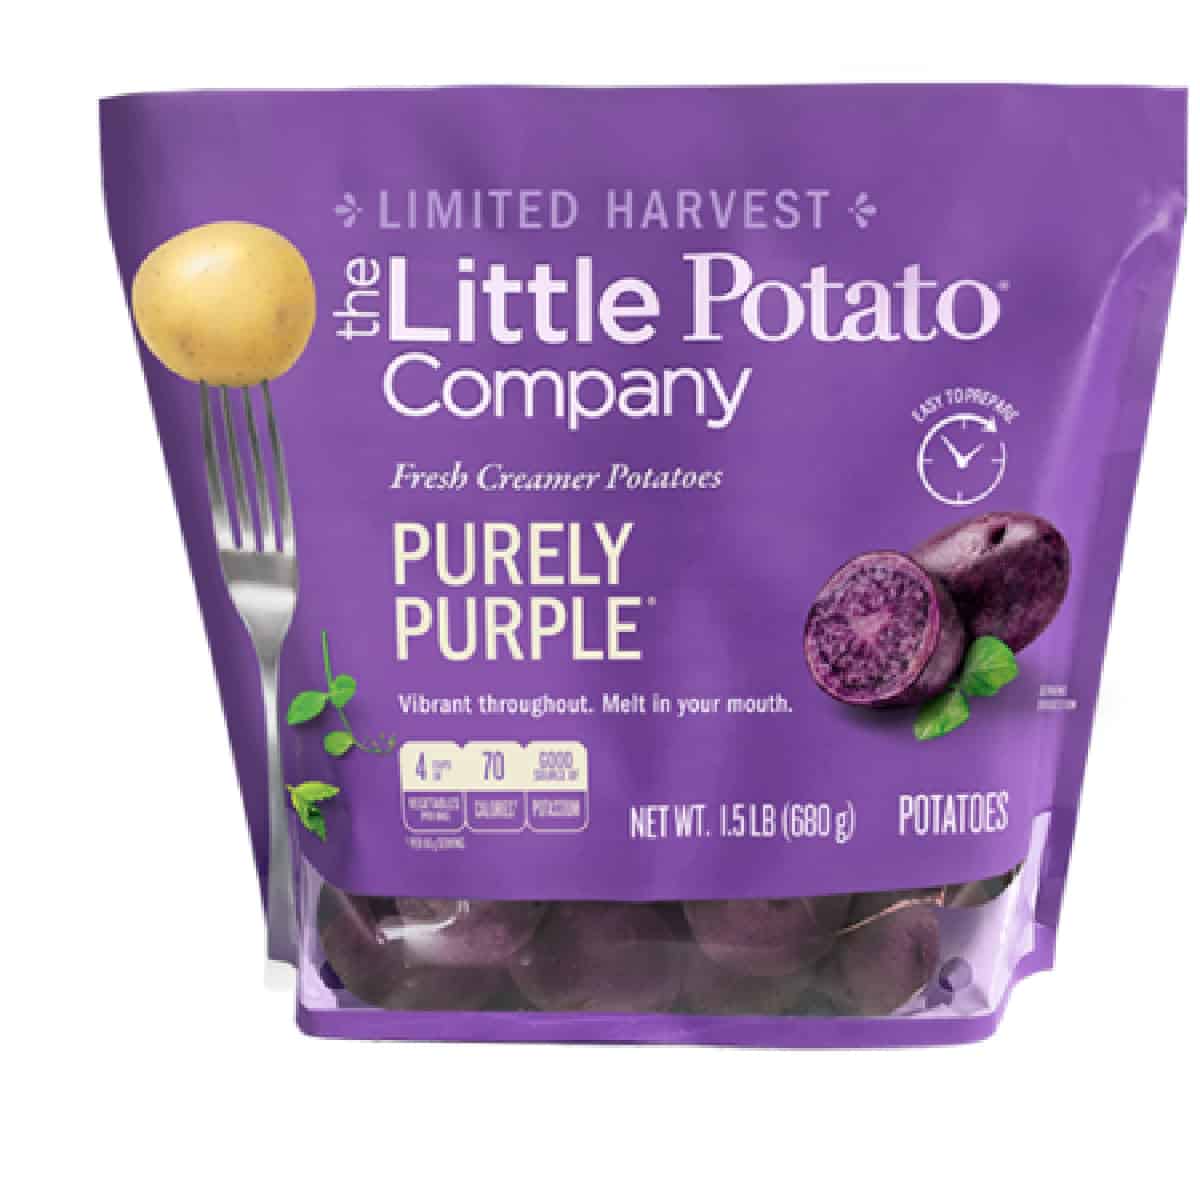 The Little Potato Company Purely Purple Little Potatoes